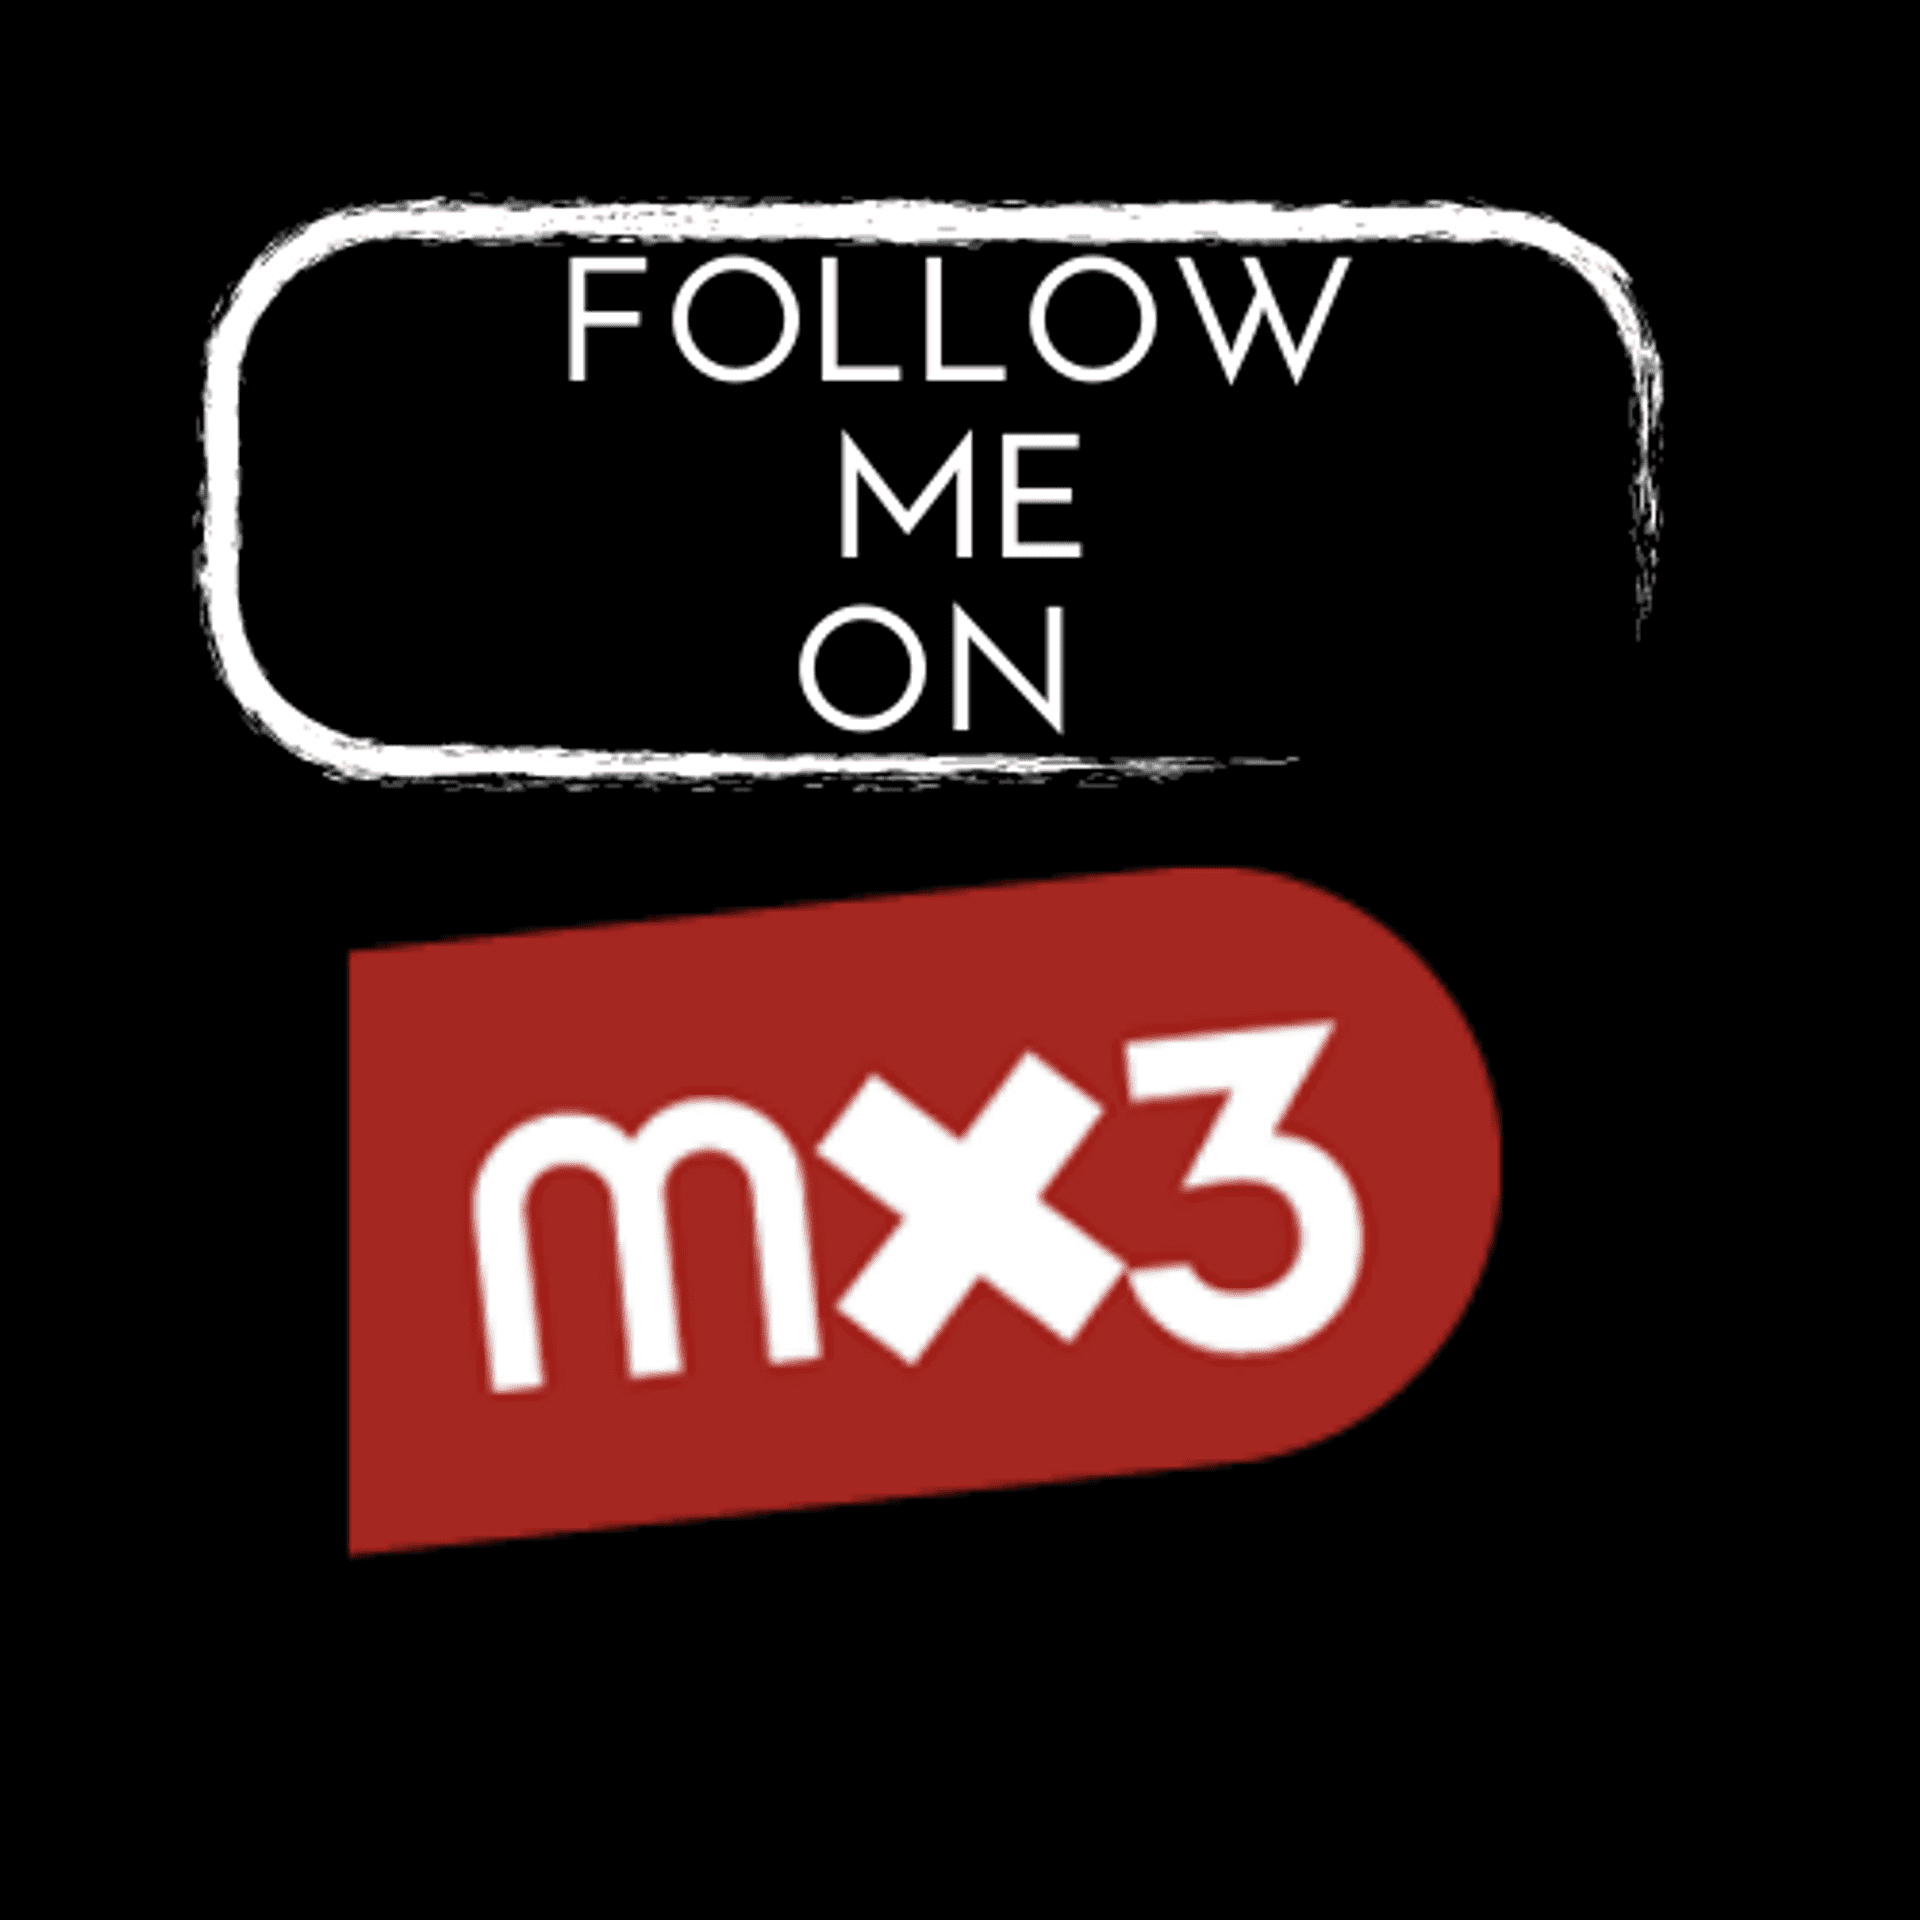 follow me on mx3